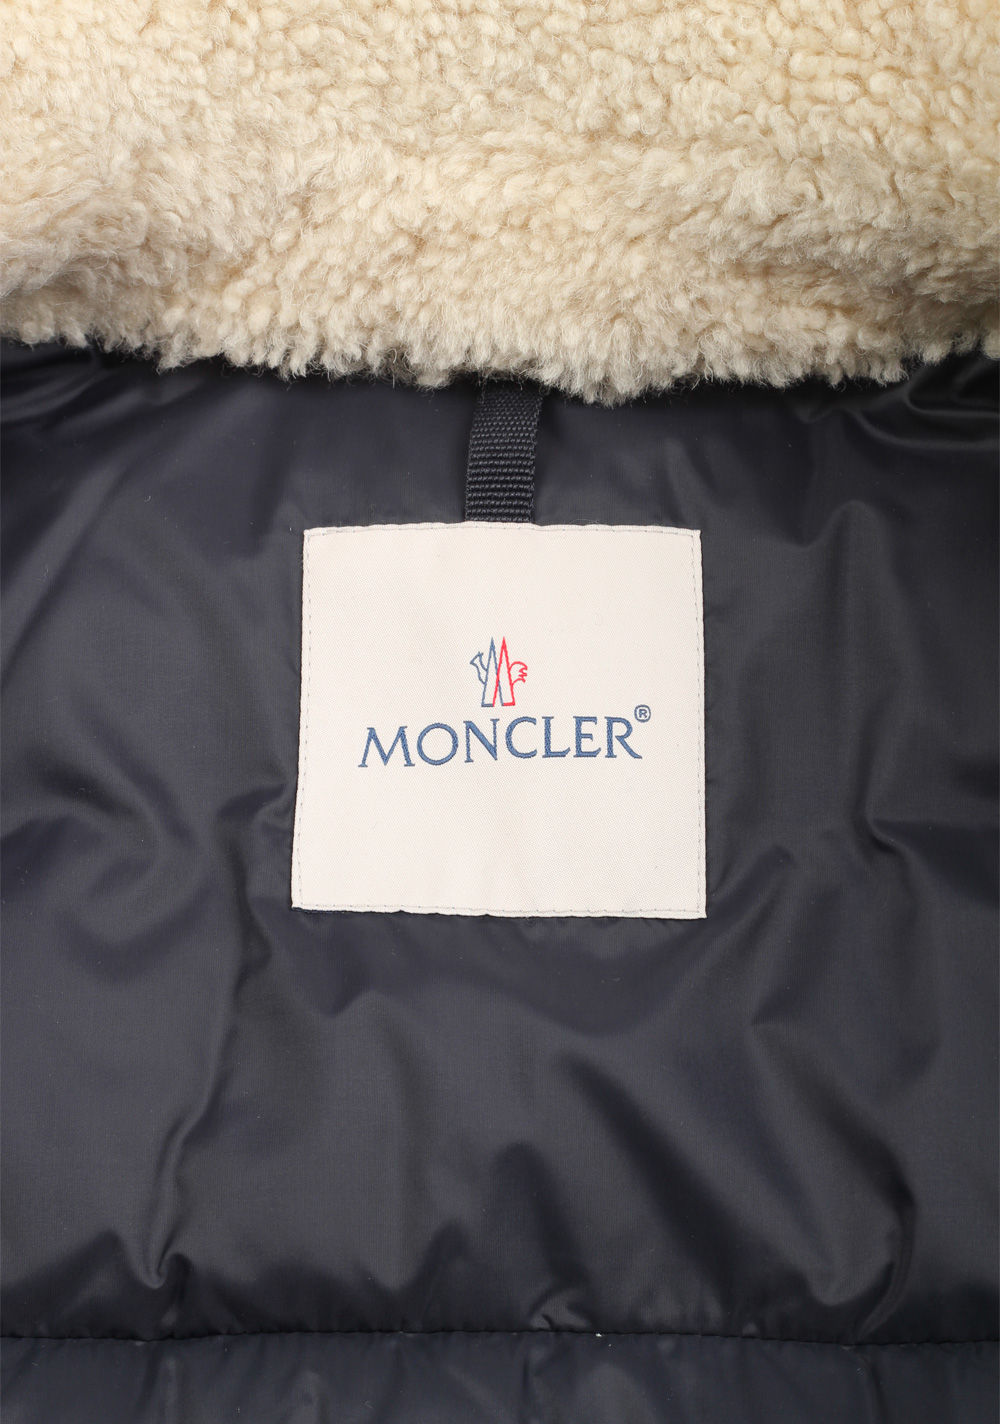 moncler size m